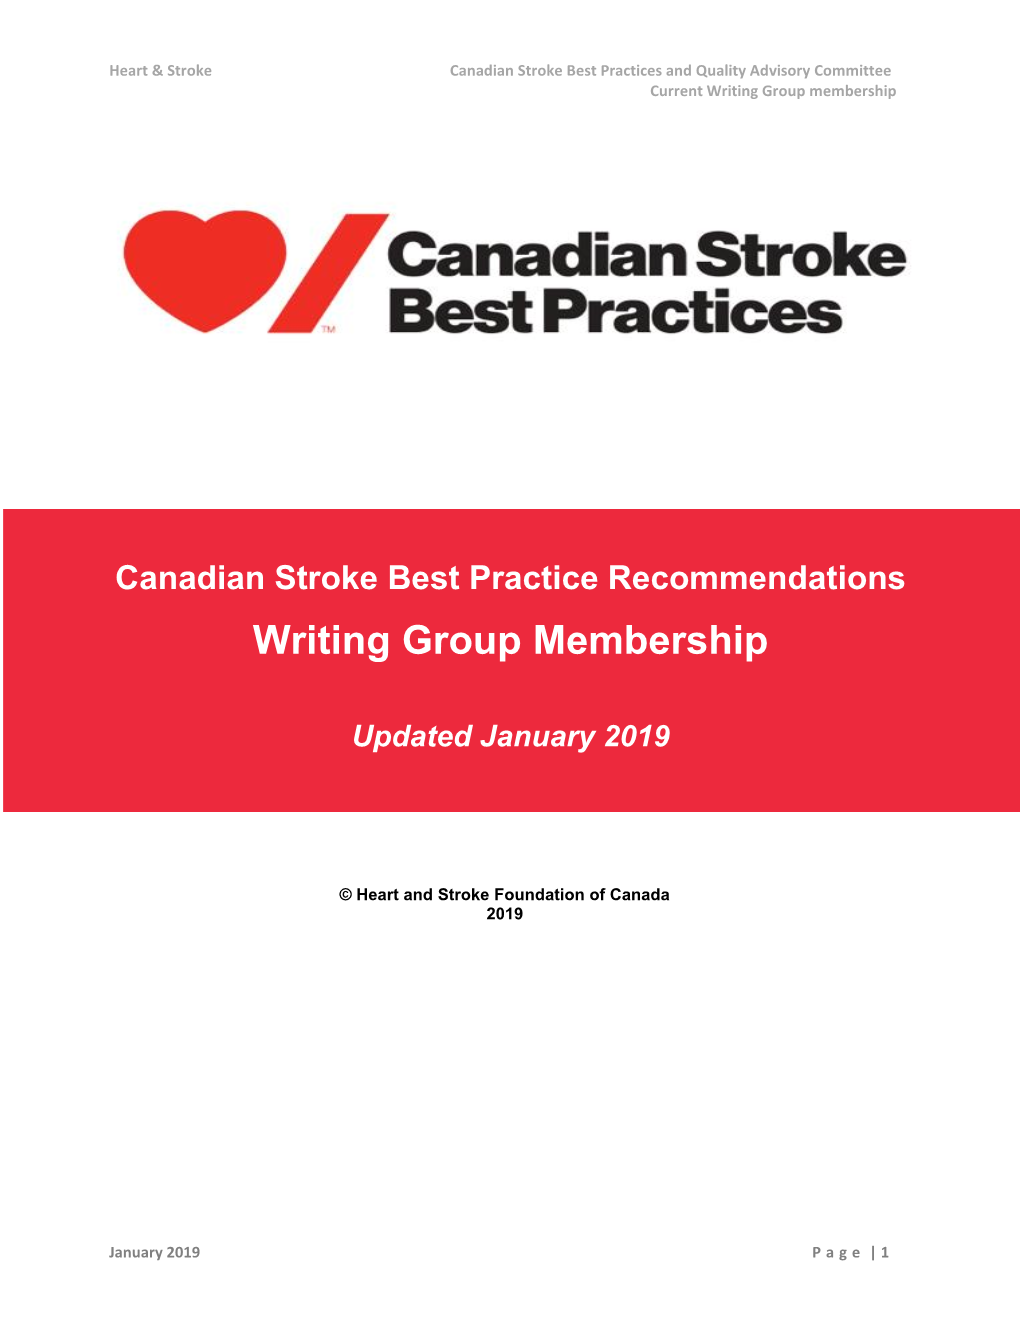 Writing Group Membership